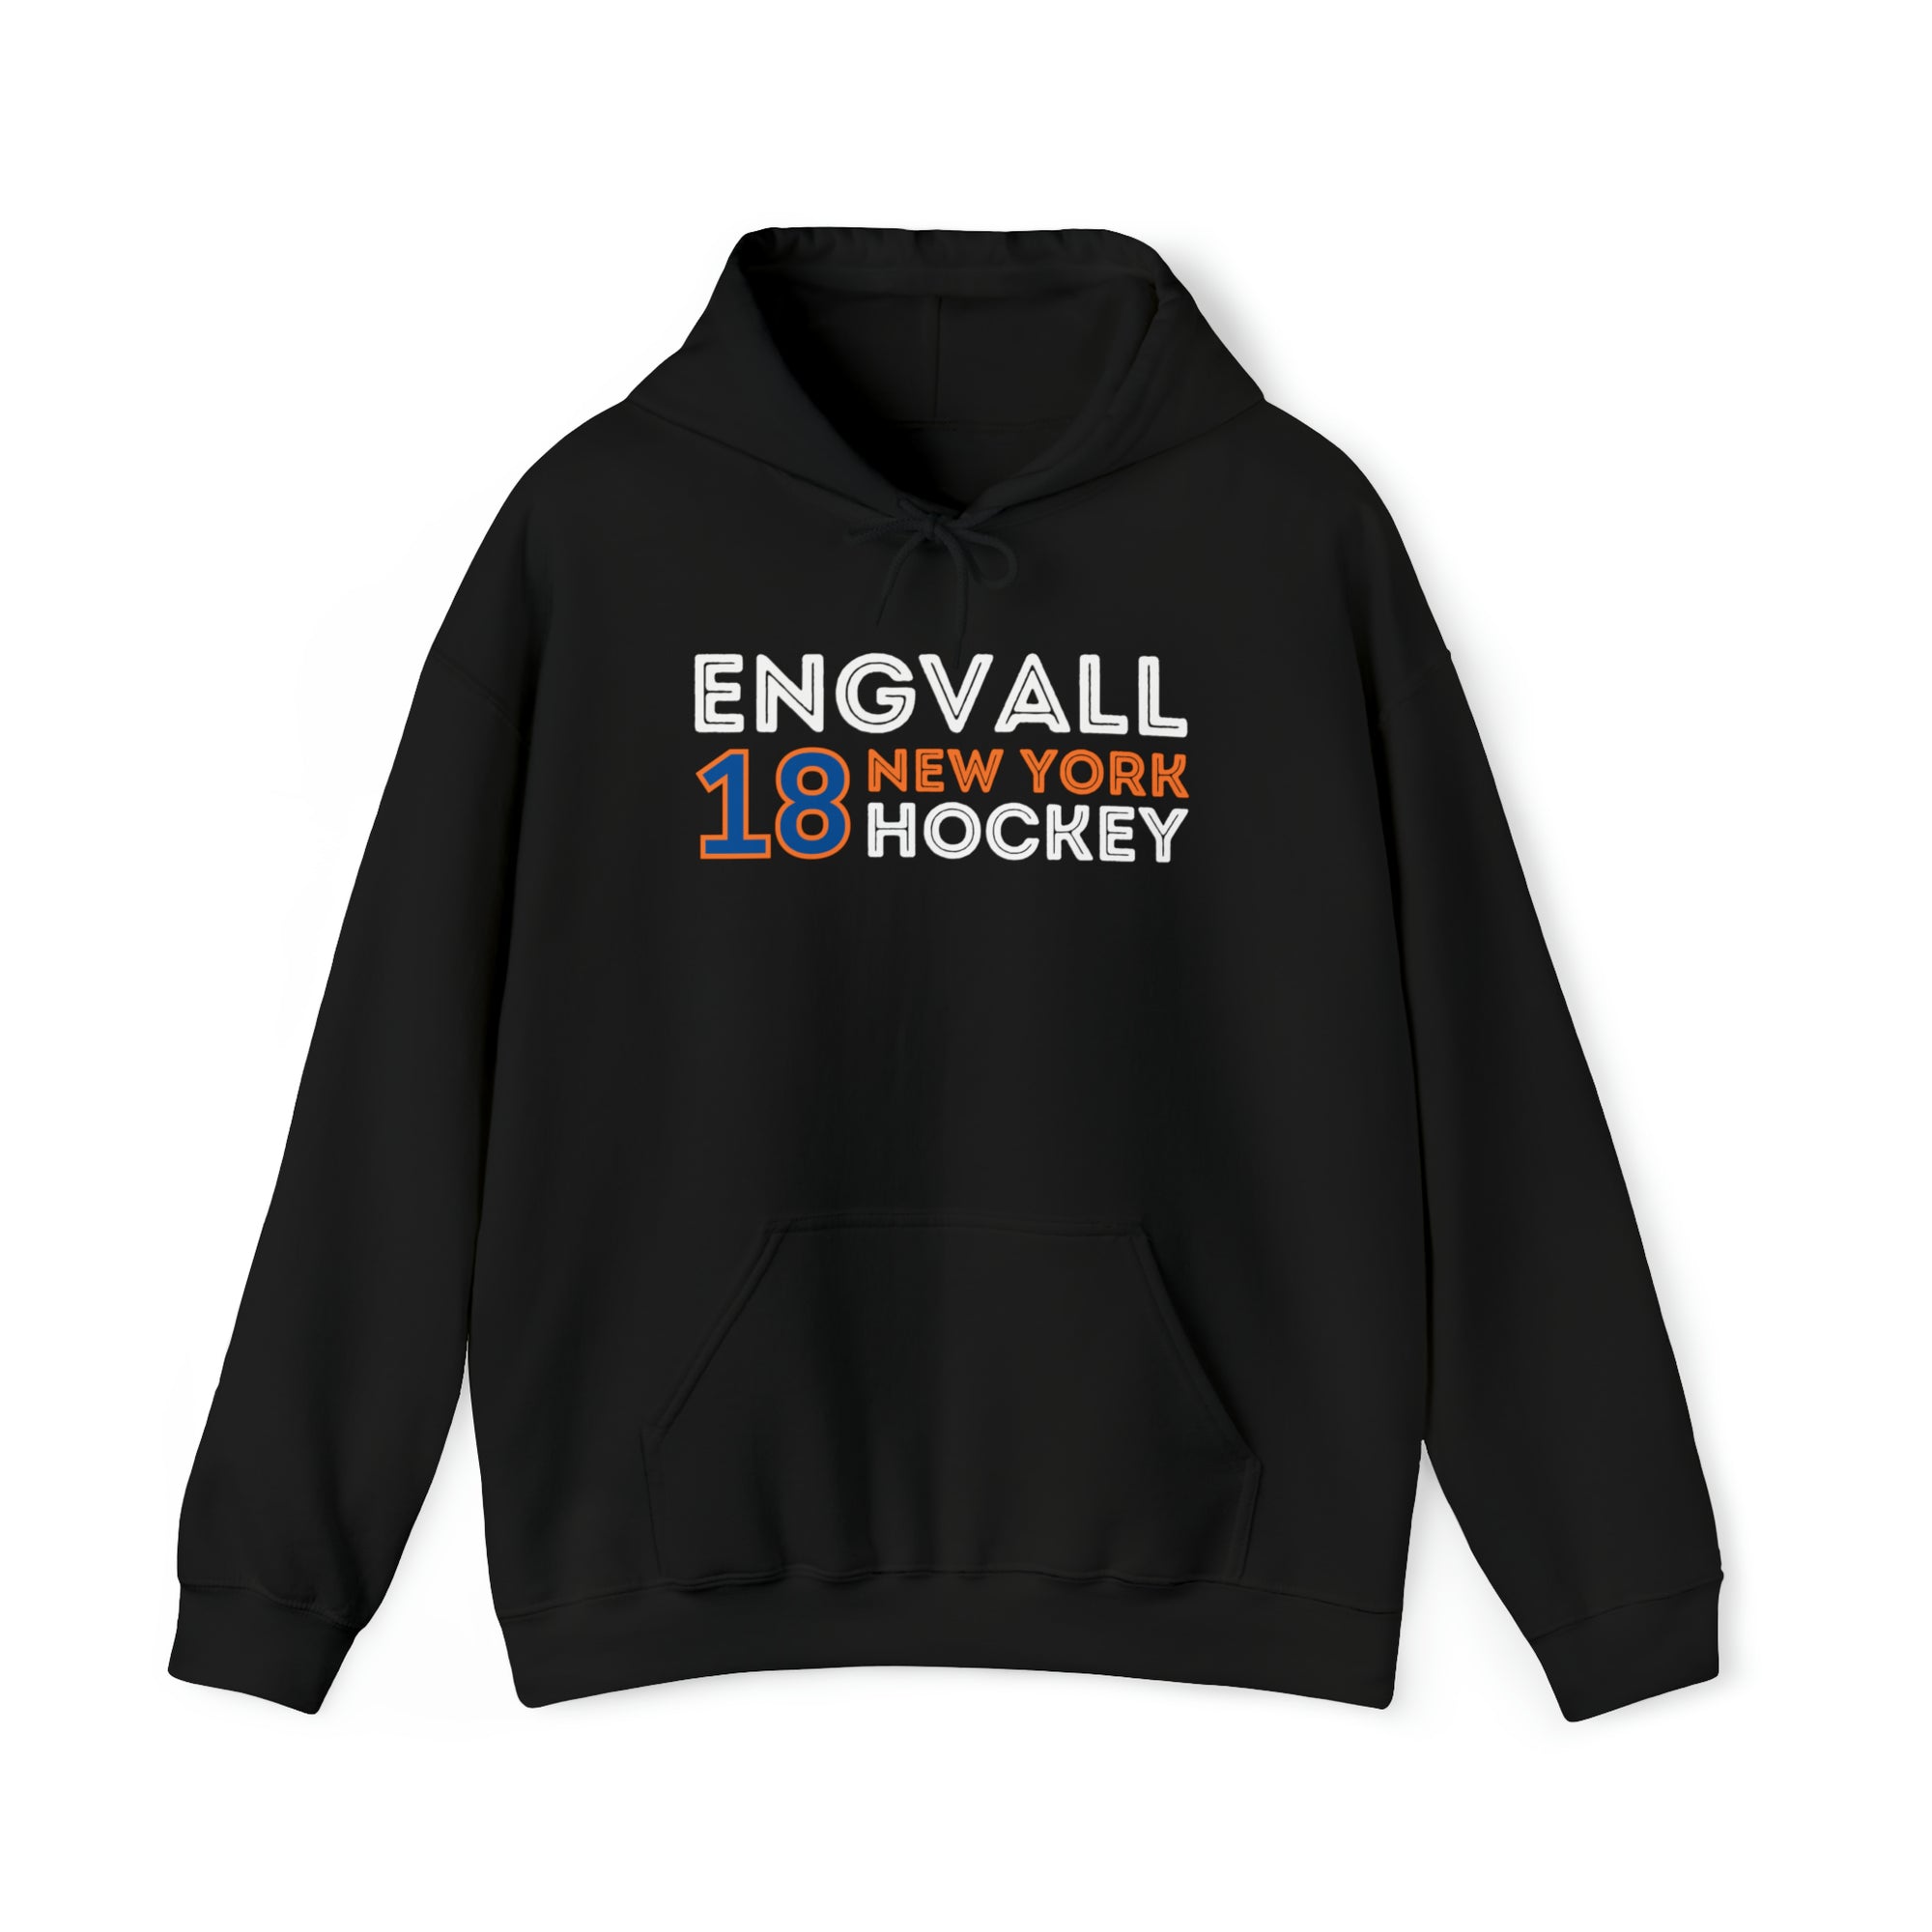 Engvall 18 New York Hockey Grafitti Wall Design Unisex Hooded Sweatshirt